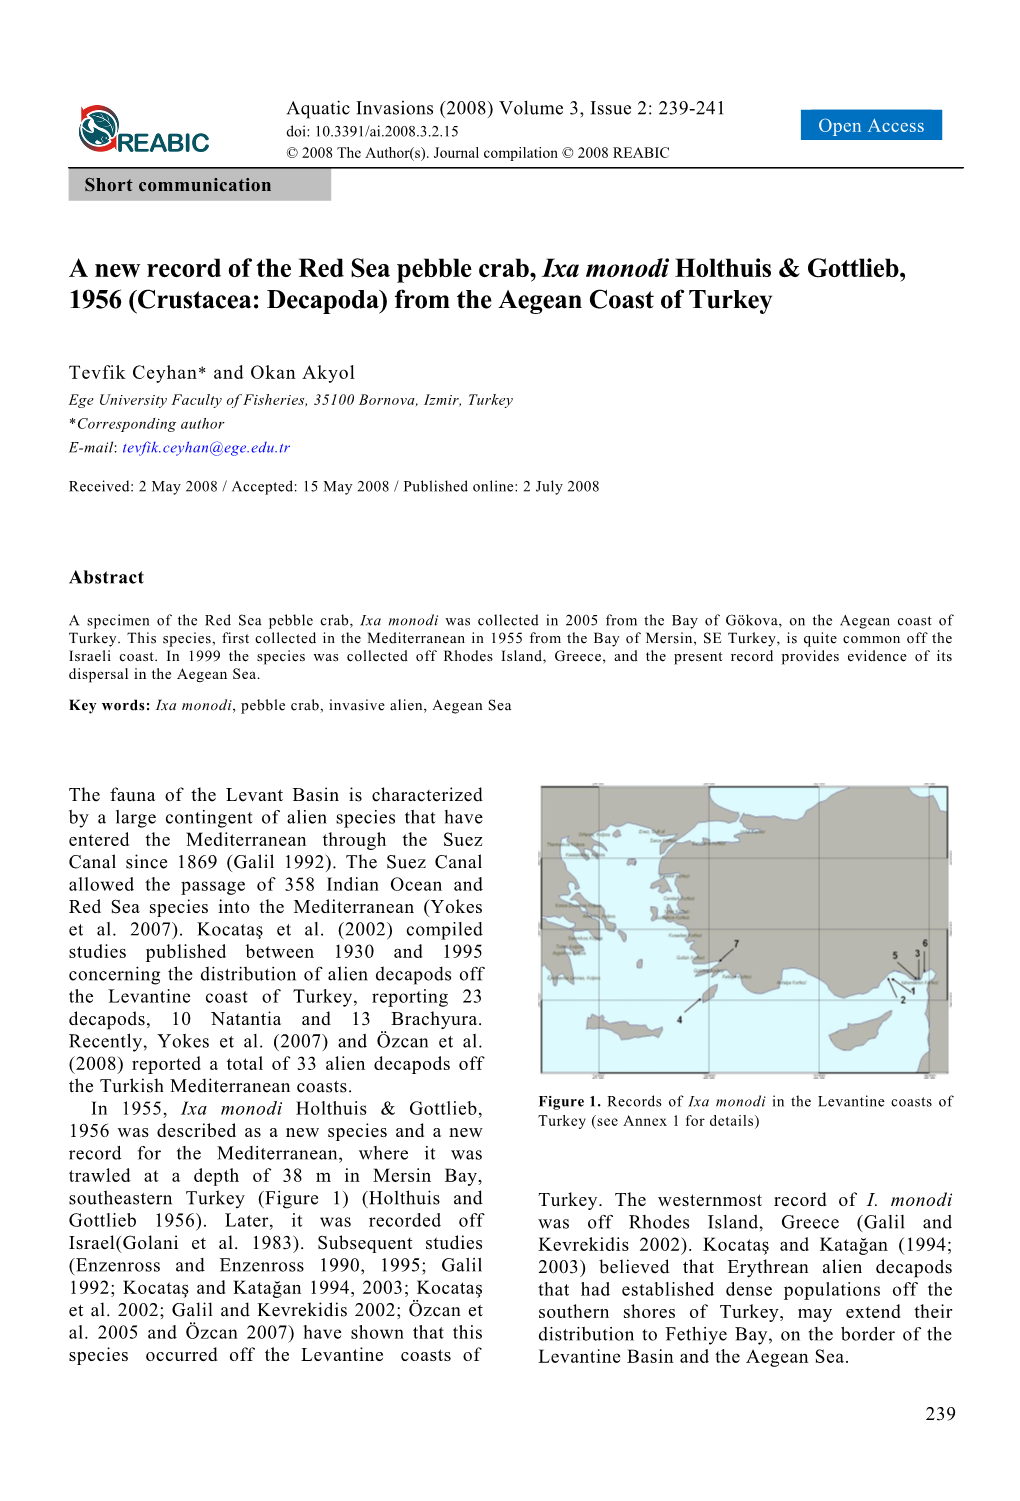 A New Record of the Red Sea Pebble Crab, Ixa Monodi Holthuis & Gottlieb